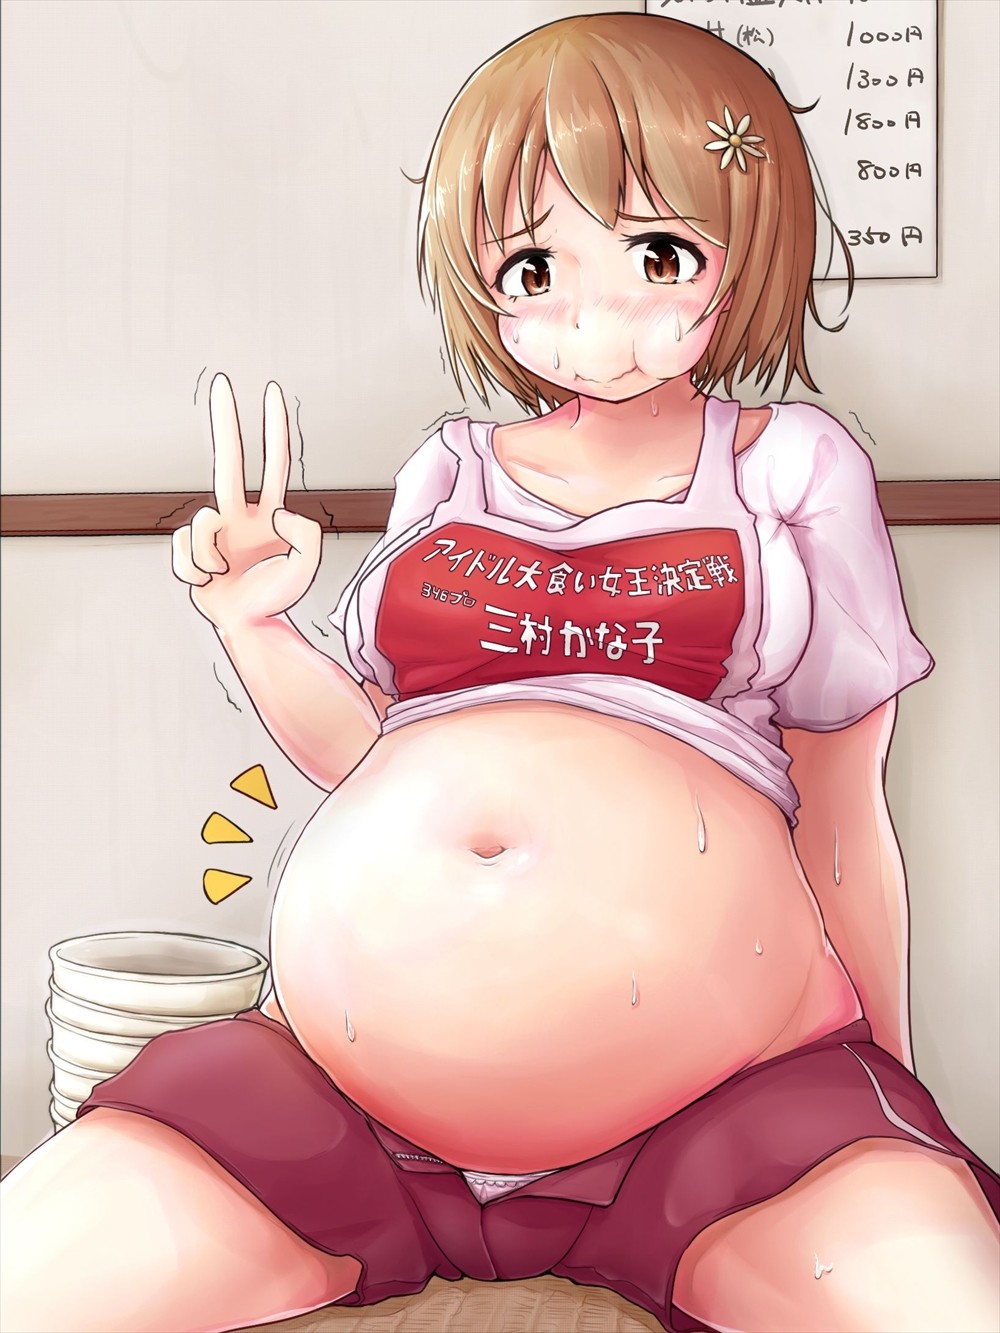 fat girl Anime